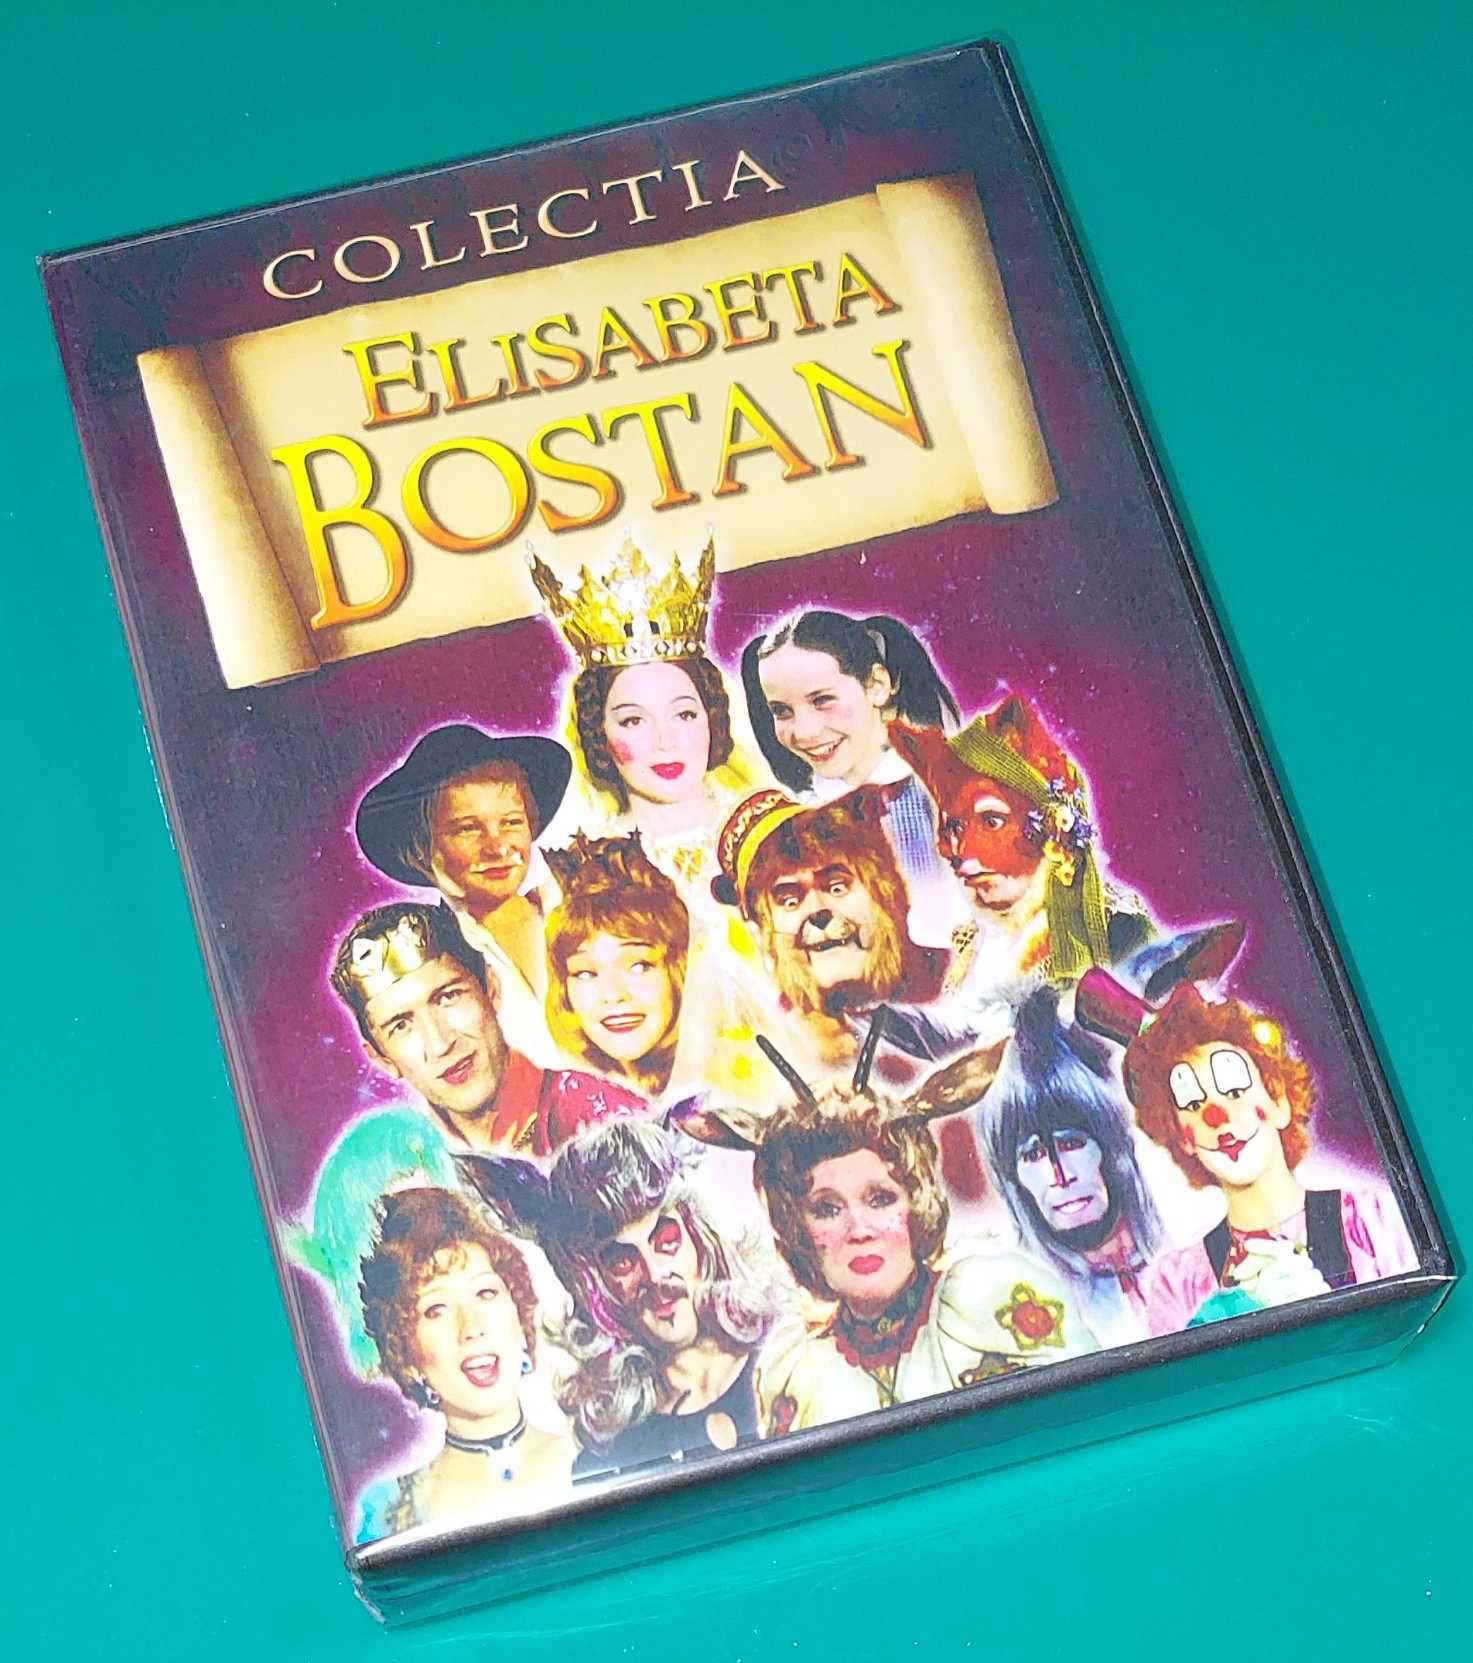 Colectie Filme - Elisabeta Bostan - vol. 1 - 8 DVD